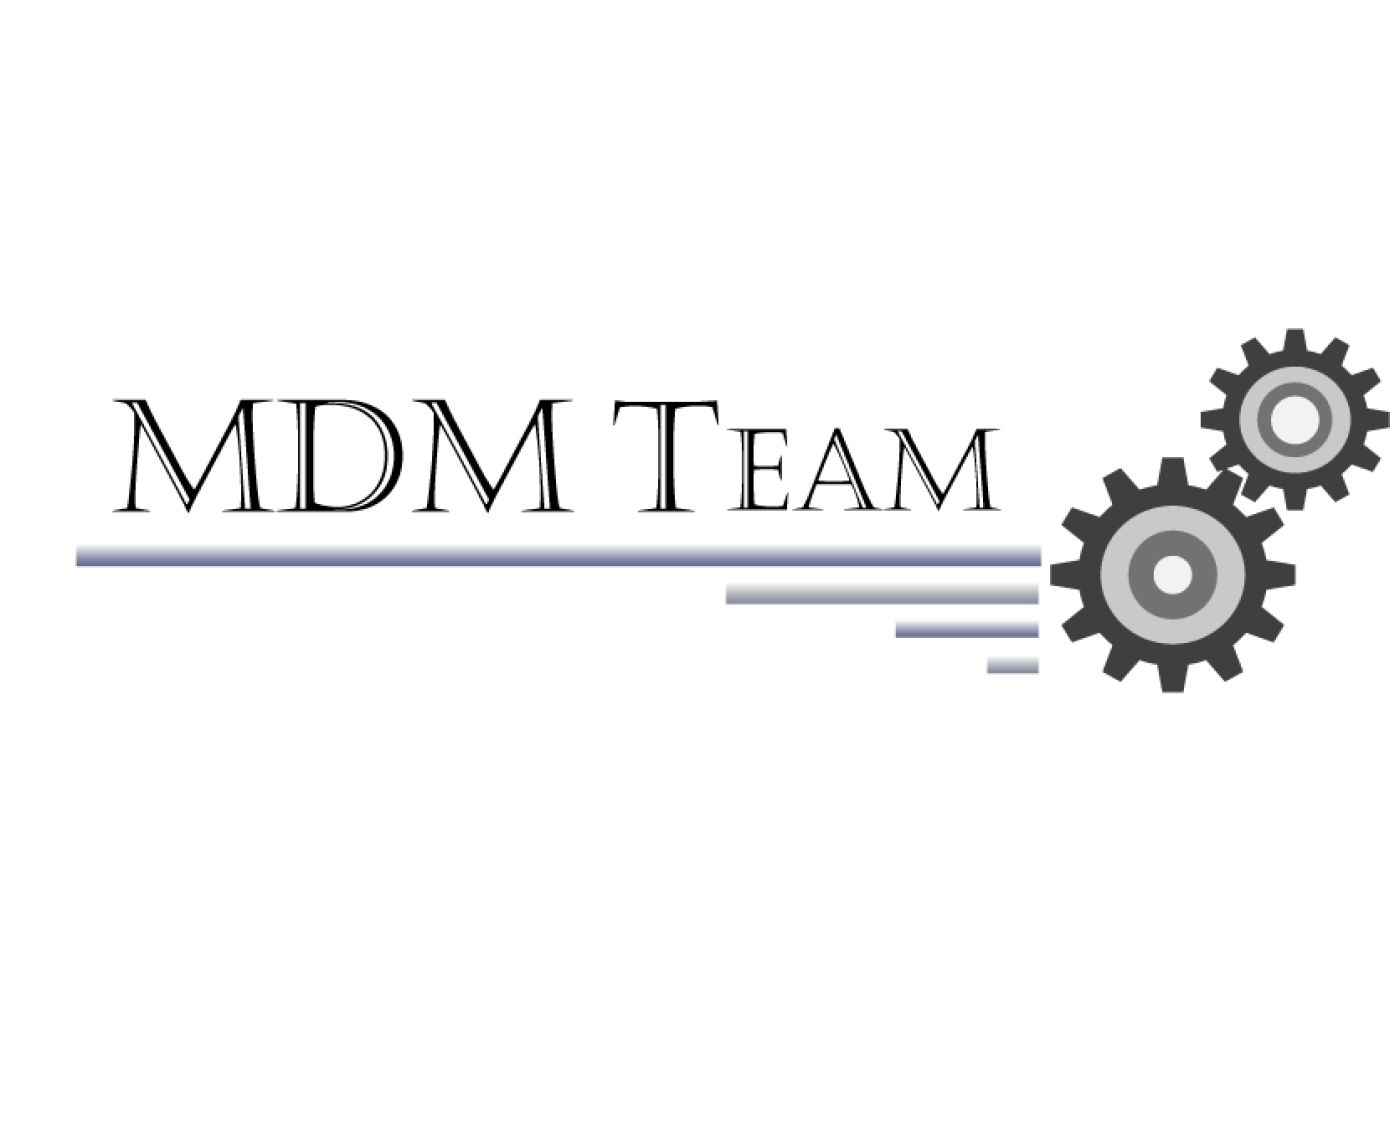 Techfem & MDM Team @ OMC 2017